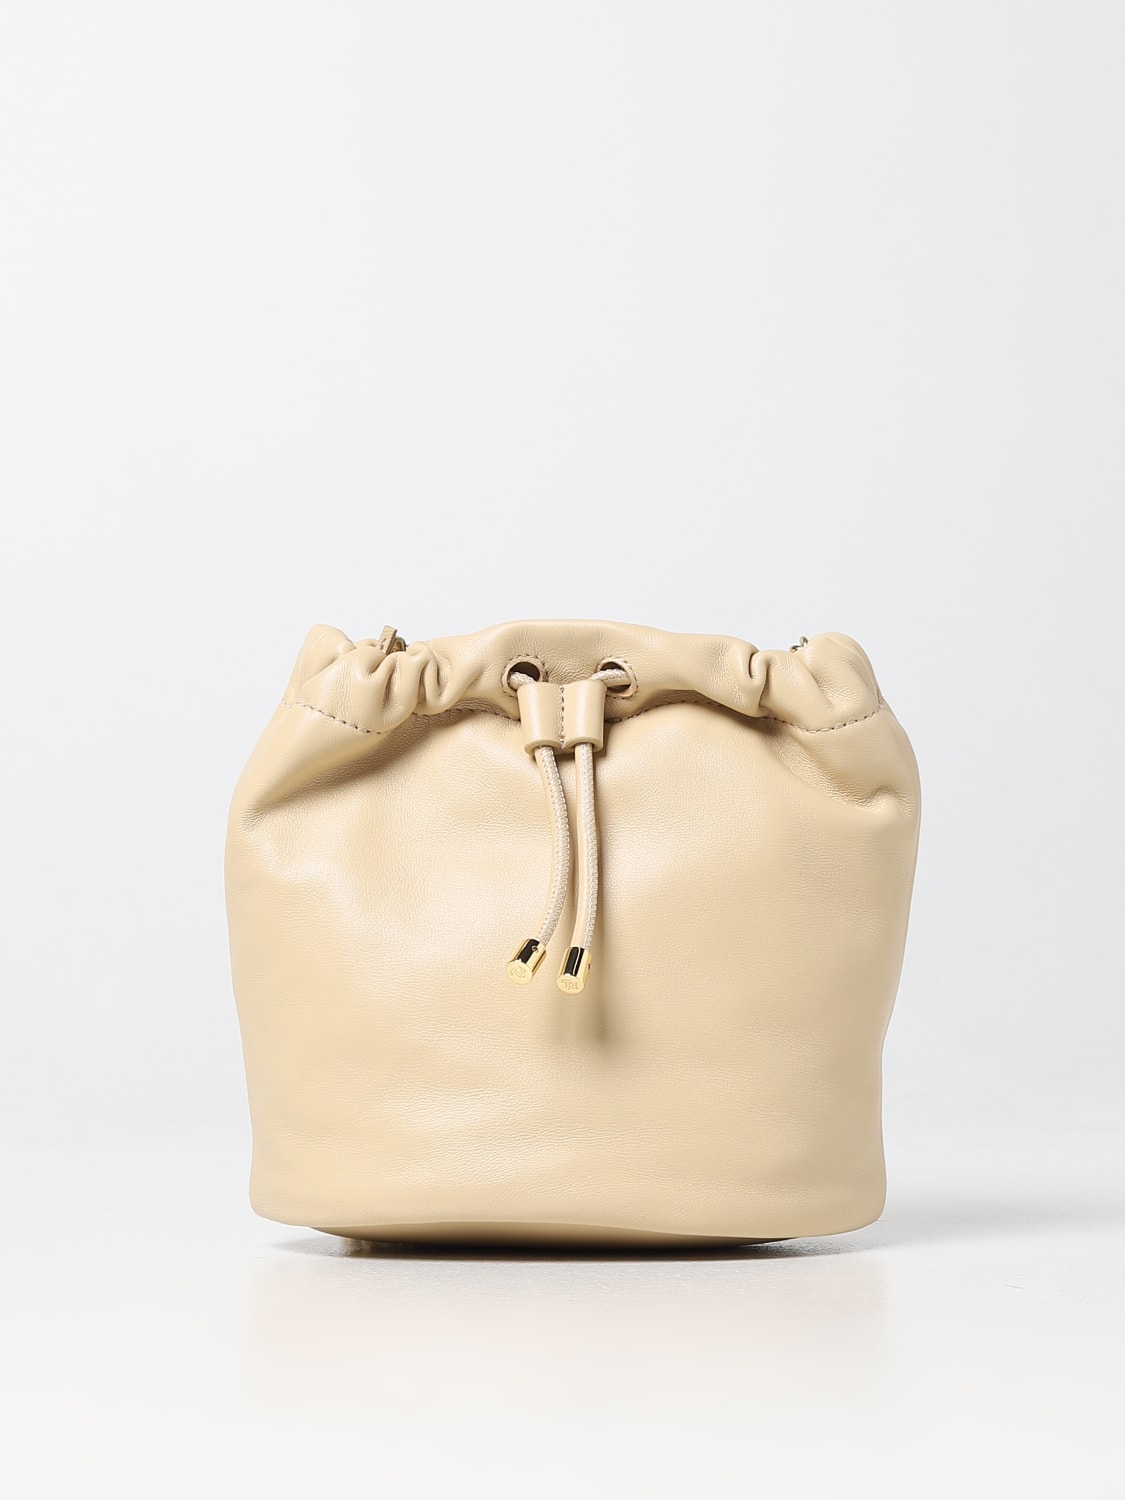 Lauren Ralph Lauren Outlet: mini bag for woman - Beige  Lauren Ralph Lauren  mini bag 431884917 online at